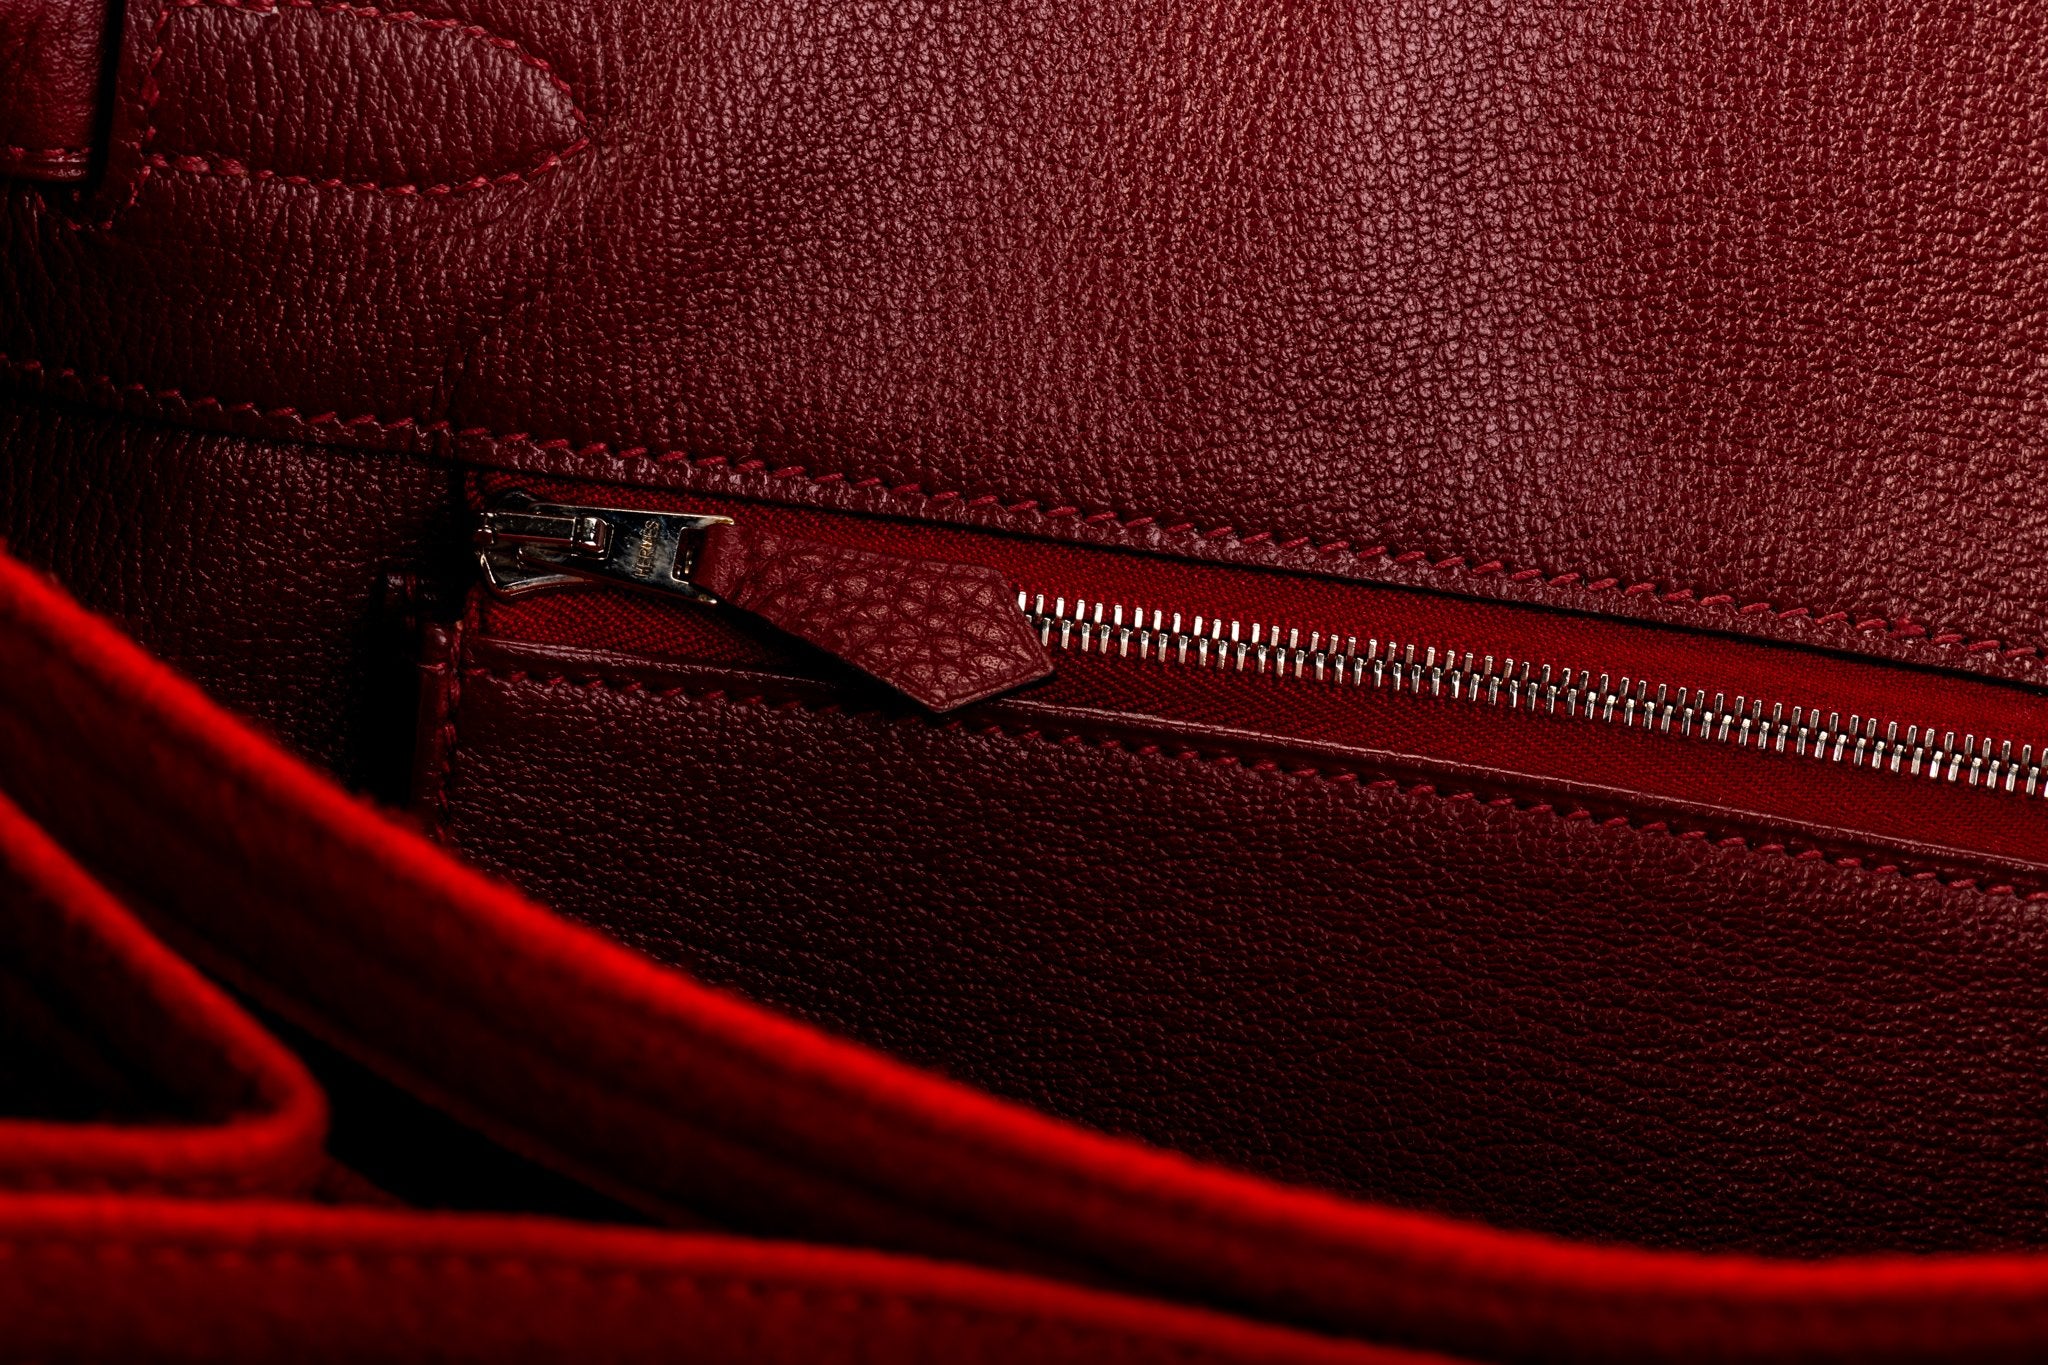 Hermes Rouge H Clemence Leather Birkin Bag